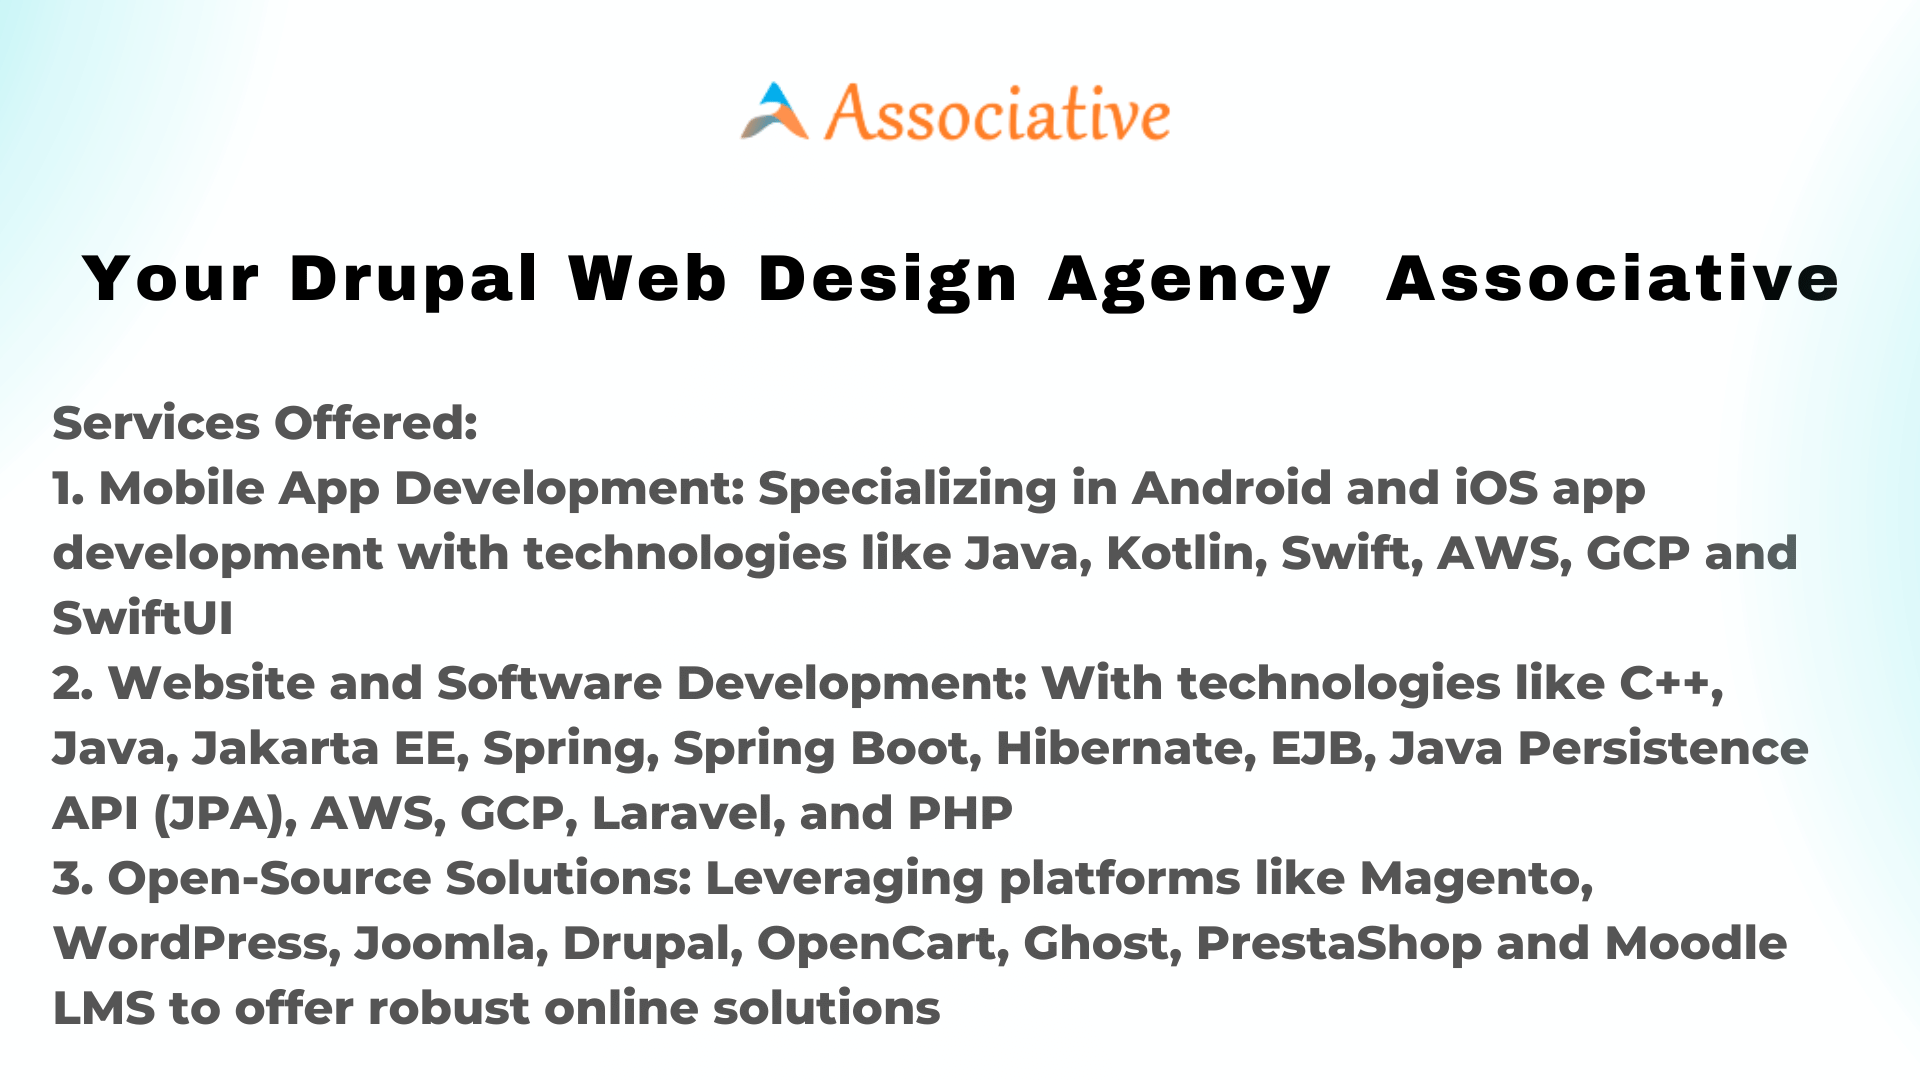 Your Drupal Web Design Agency Associative